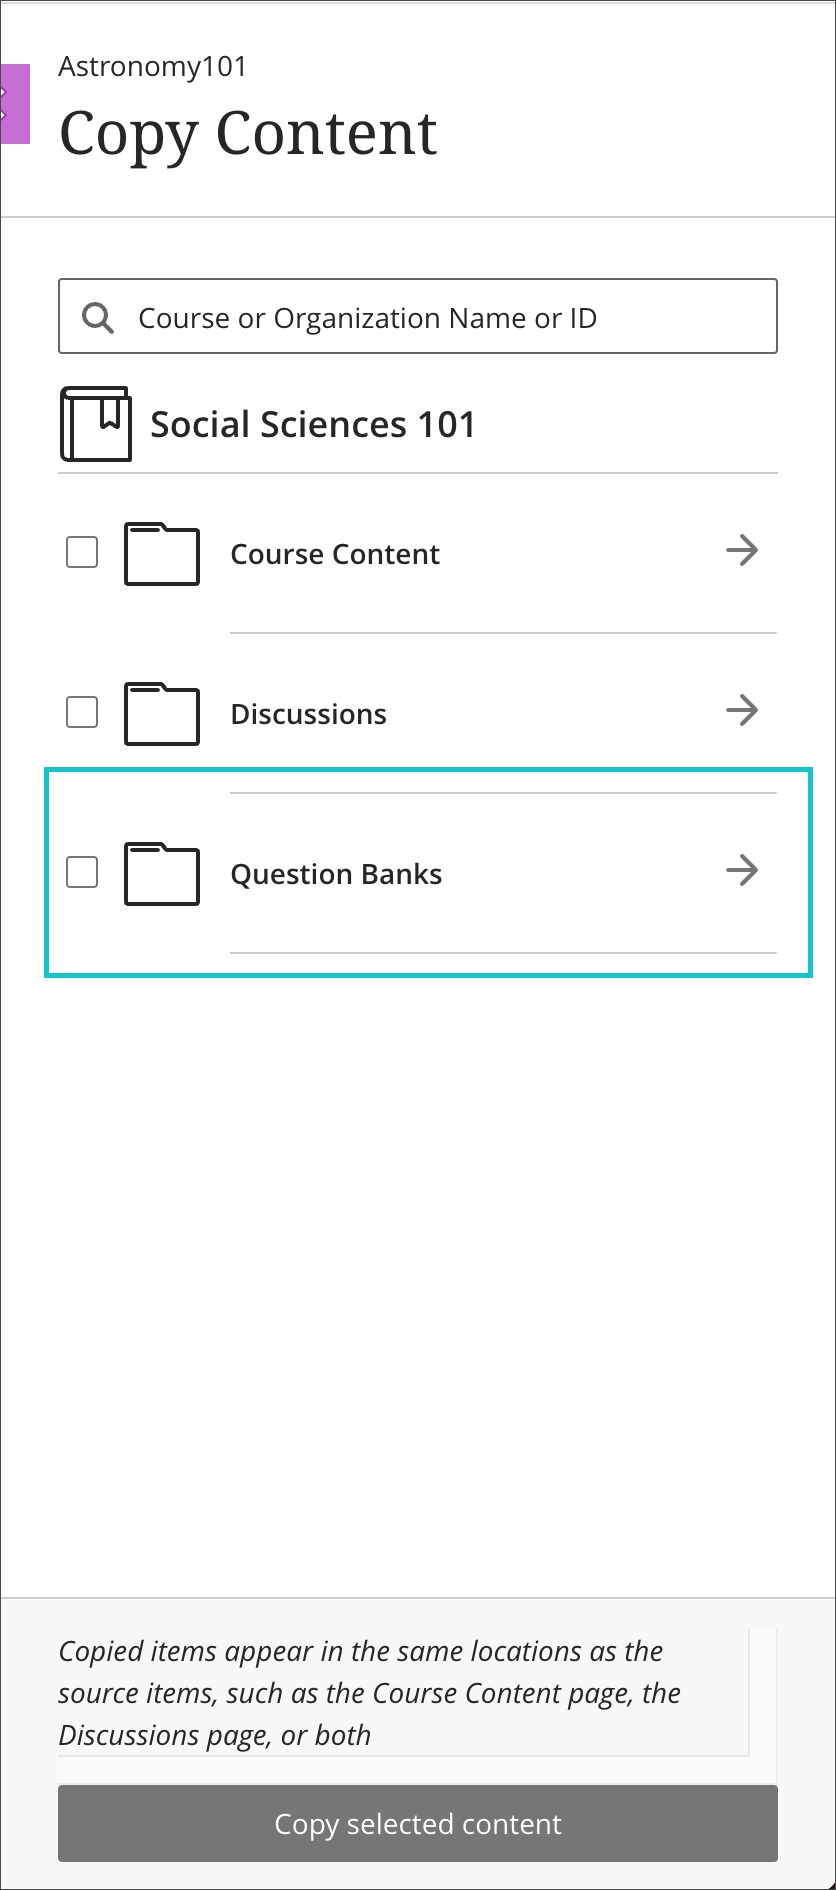 Question Banks folder option from Copy Content menu